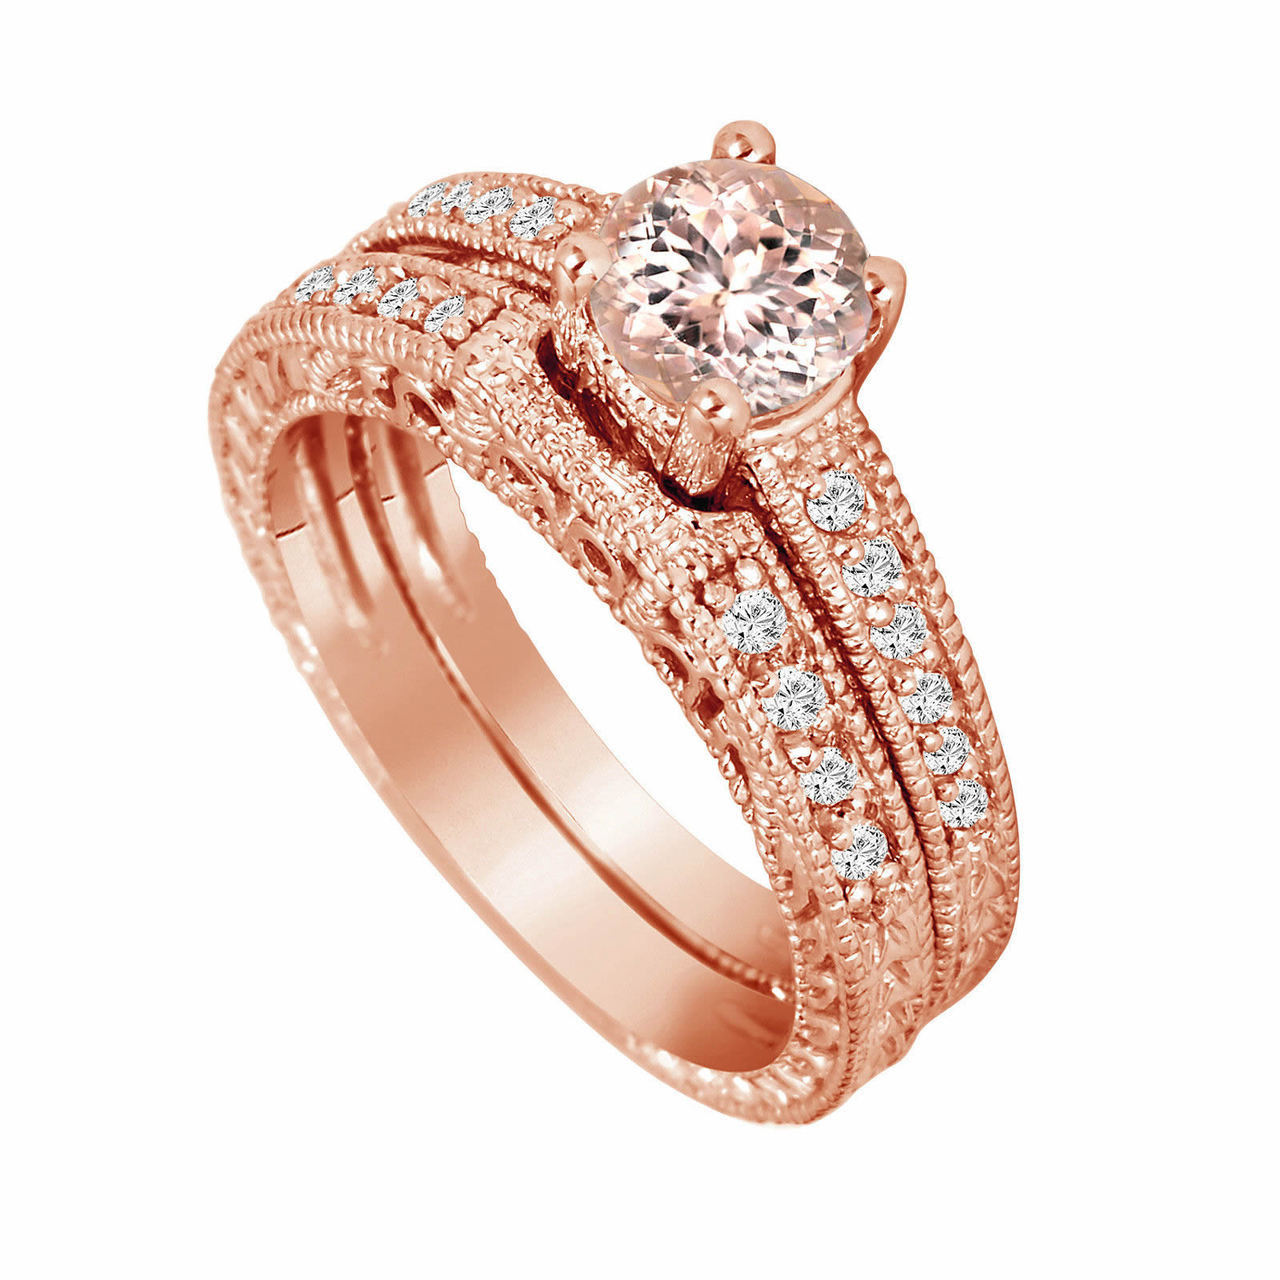 Morganite & Diamond Engagement Ring 14K Rose Gold 1.01 Carat And ...